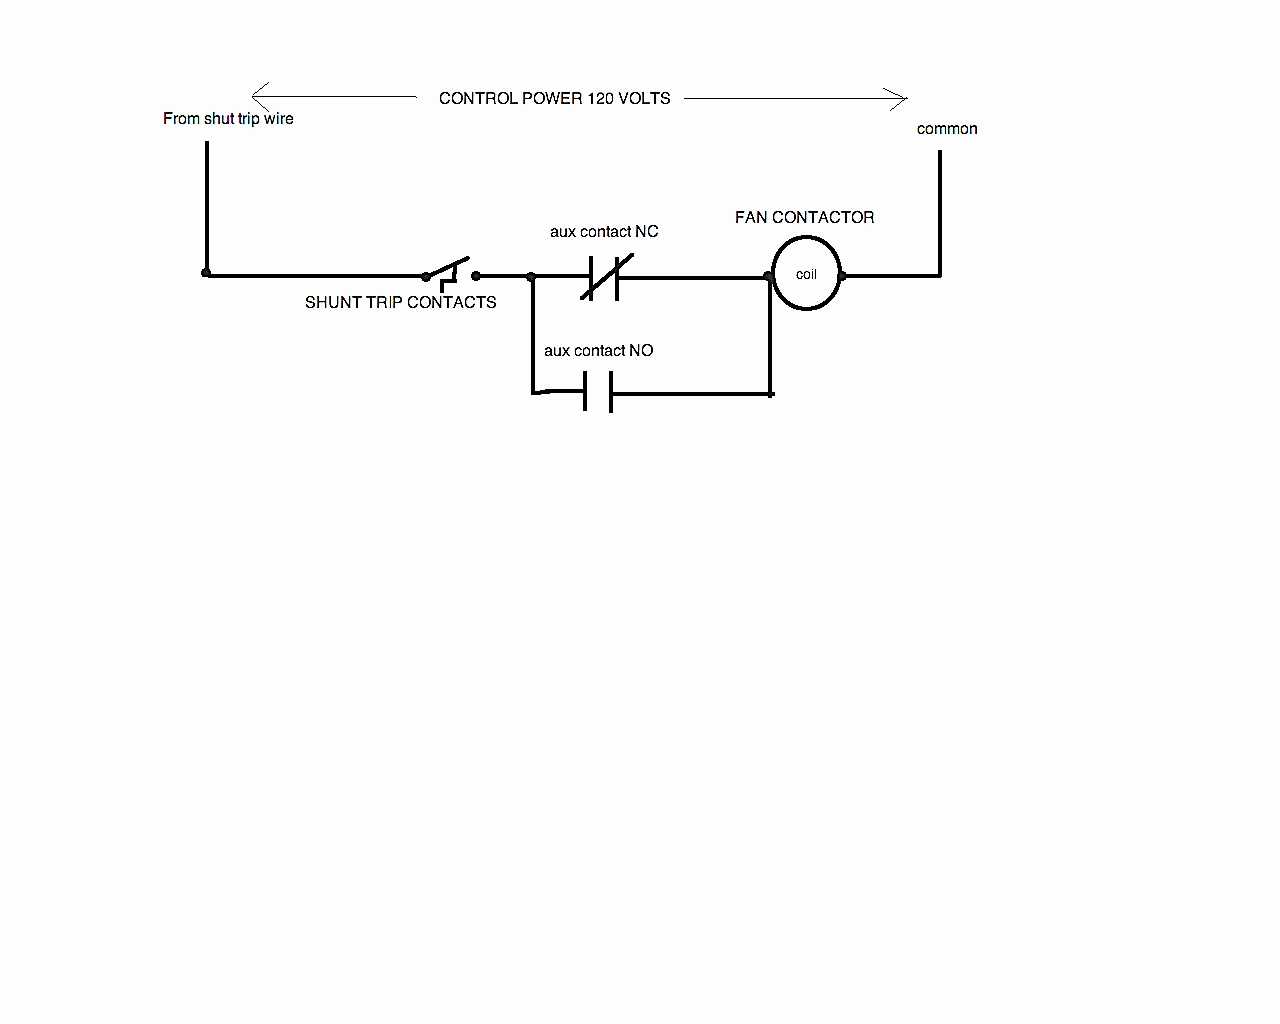 Ansul Shut Down Wiring Diagram | Wiring Diagram - Ansul System Wiring Diagram